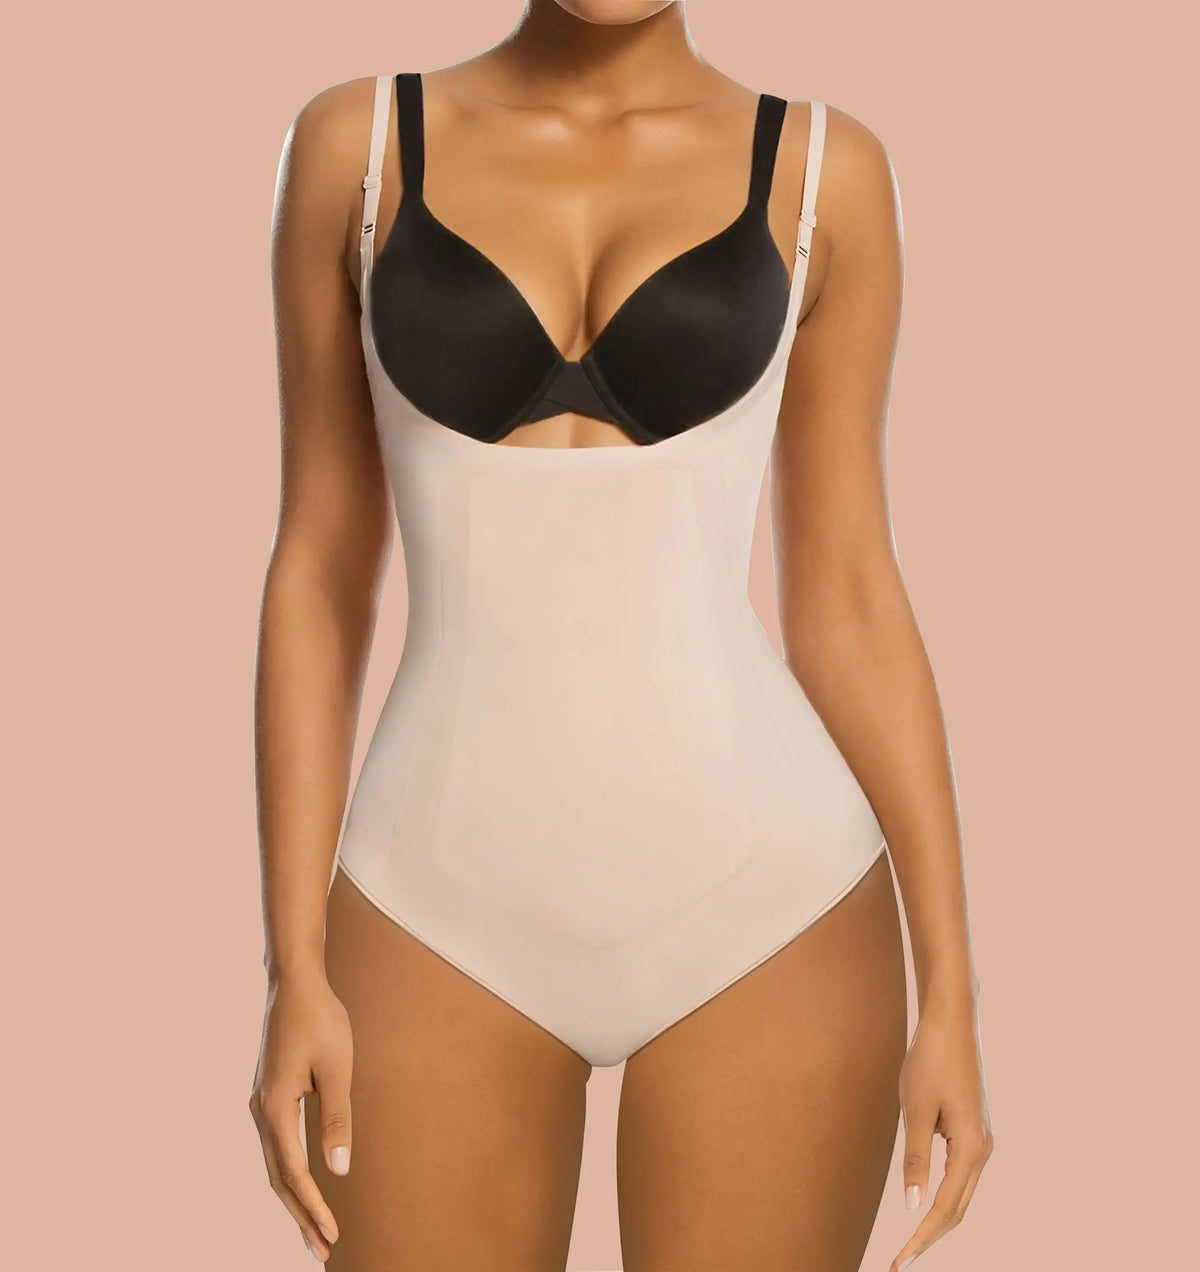 SHAPERX Low Back Bodysuit for Women Tummy Control Shapewear Seamless  Sculpting Body Shaper Thong Tank Top